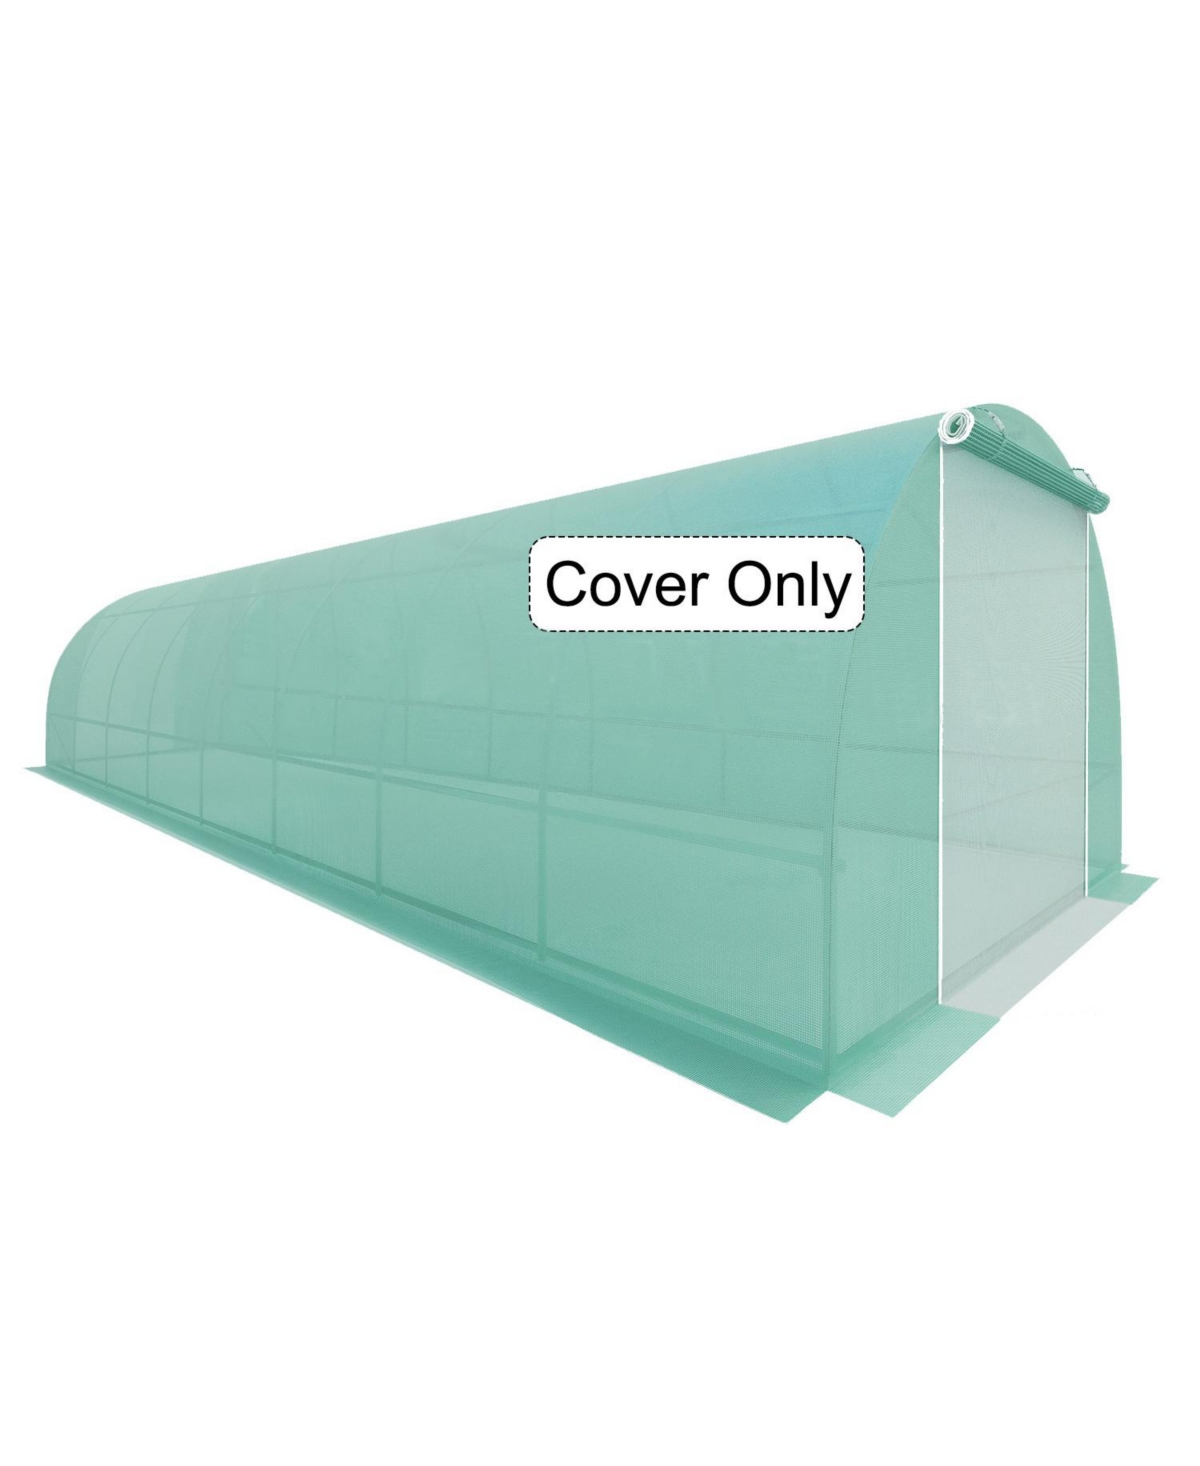 20' x 10' x 6.6' Greenhouse Cover - Uv, Low Temperature Resistant, Waterproof, Durable Pe Plastic Sheet - Green - Green